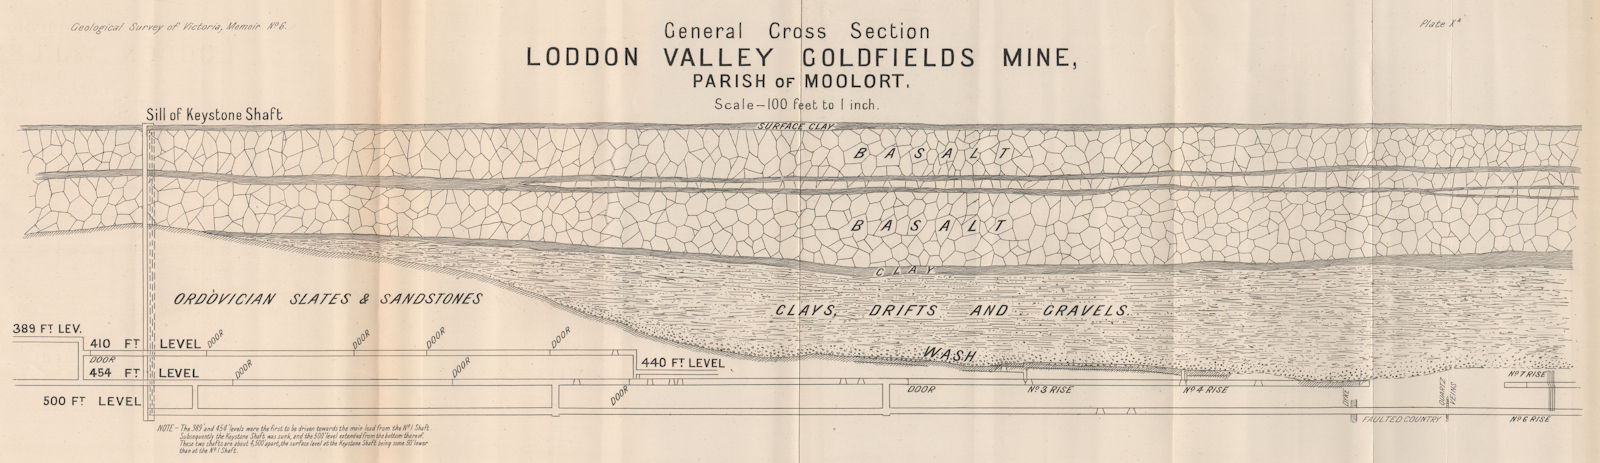 Associate Product Loddon Valley Goldfields Mine cross section, Moolort Victoria Australia 1909 map